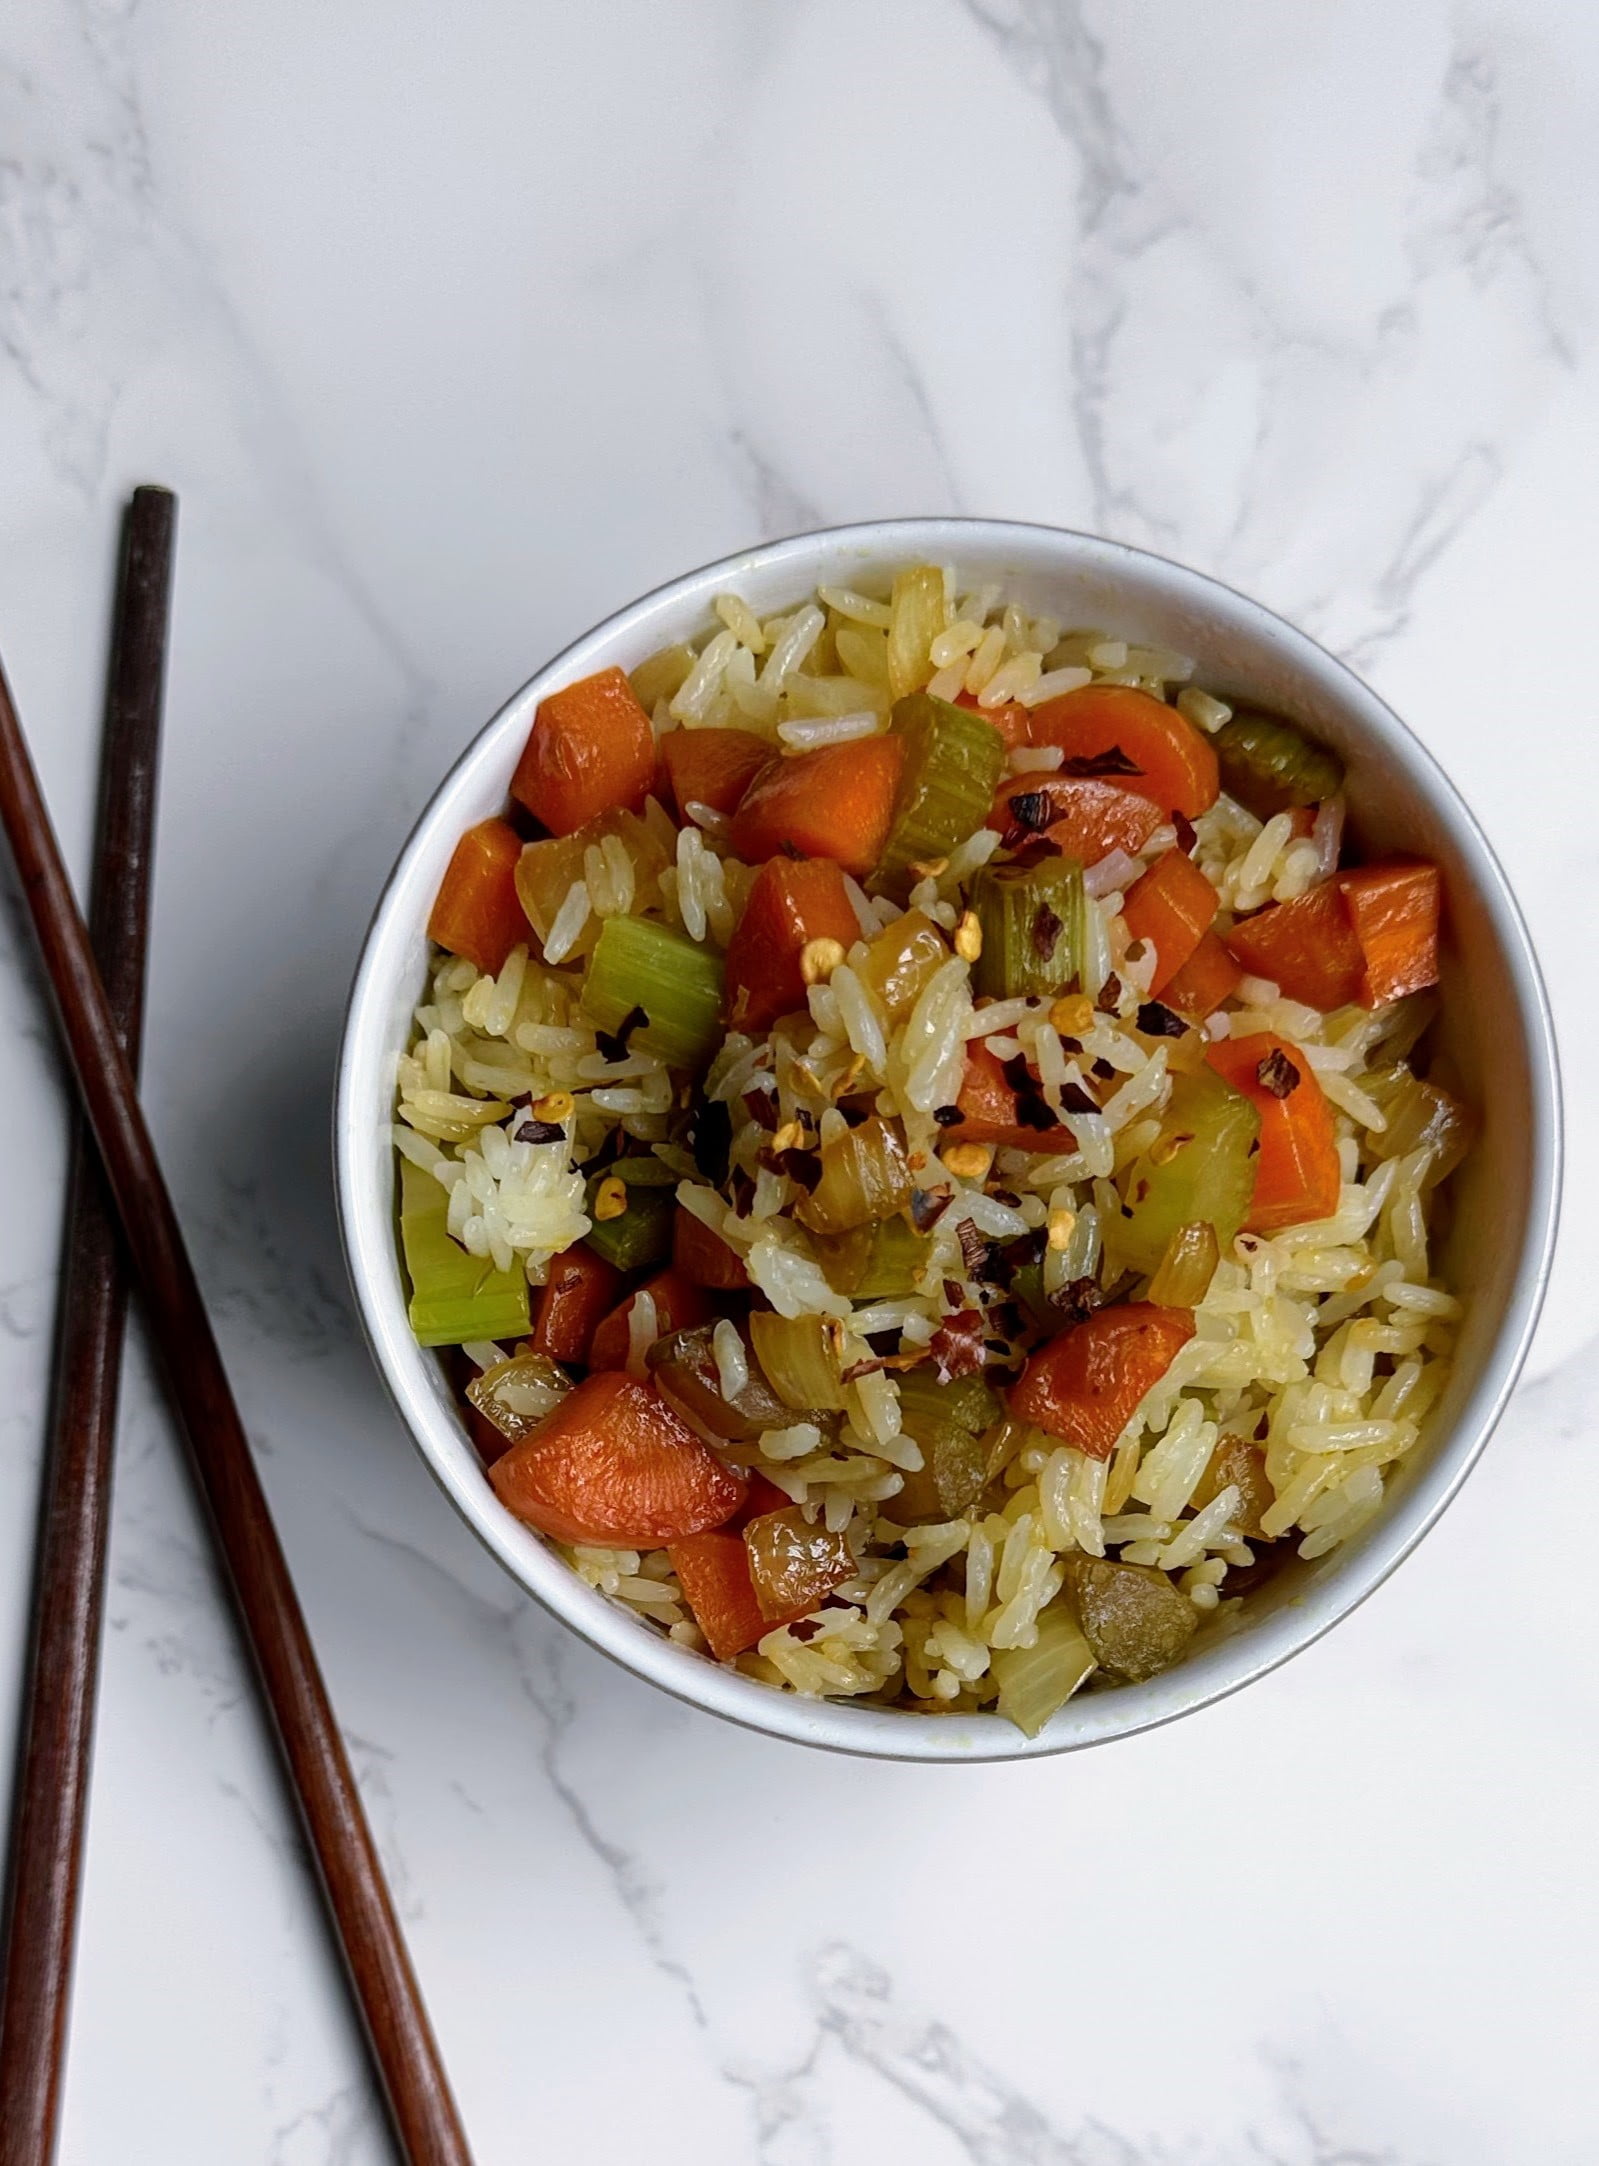 FInished bowl of vegan fried rice